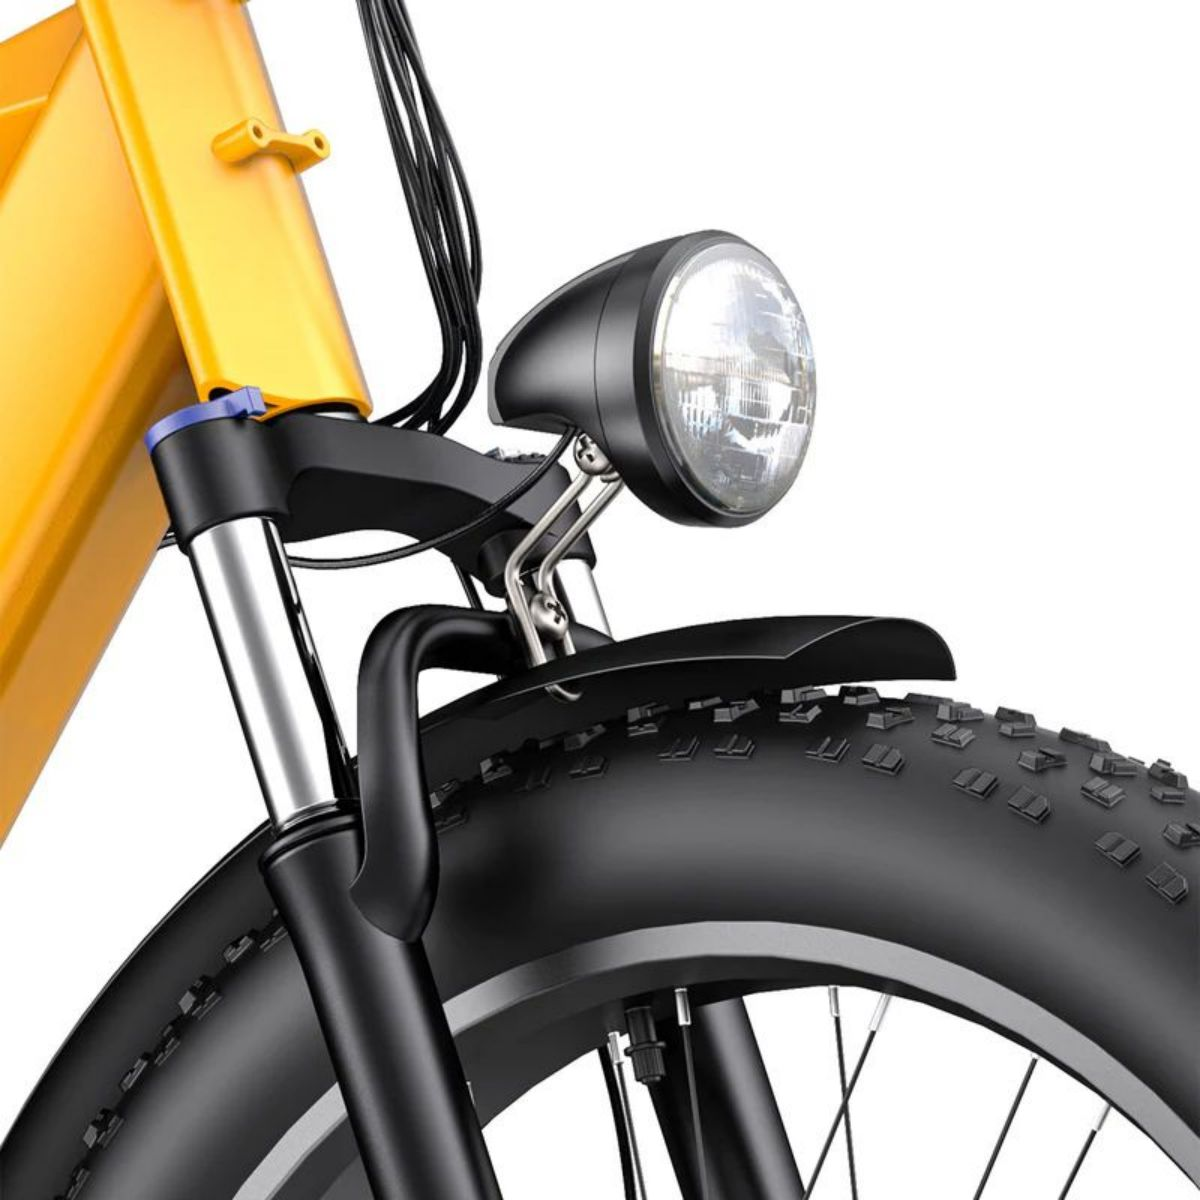 768Wh, Citybike ENGWE E26 (Laufradgröße: Zoll, Erwachsene-Rad, Gelb) 26